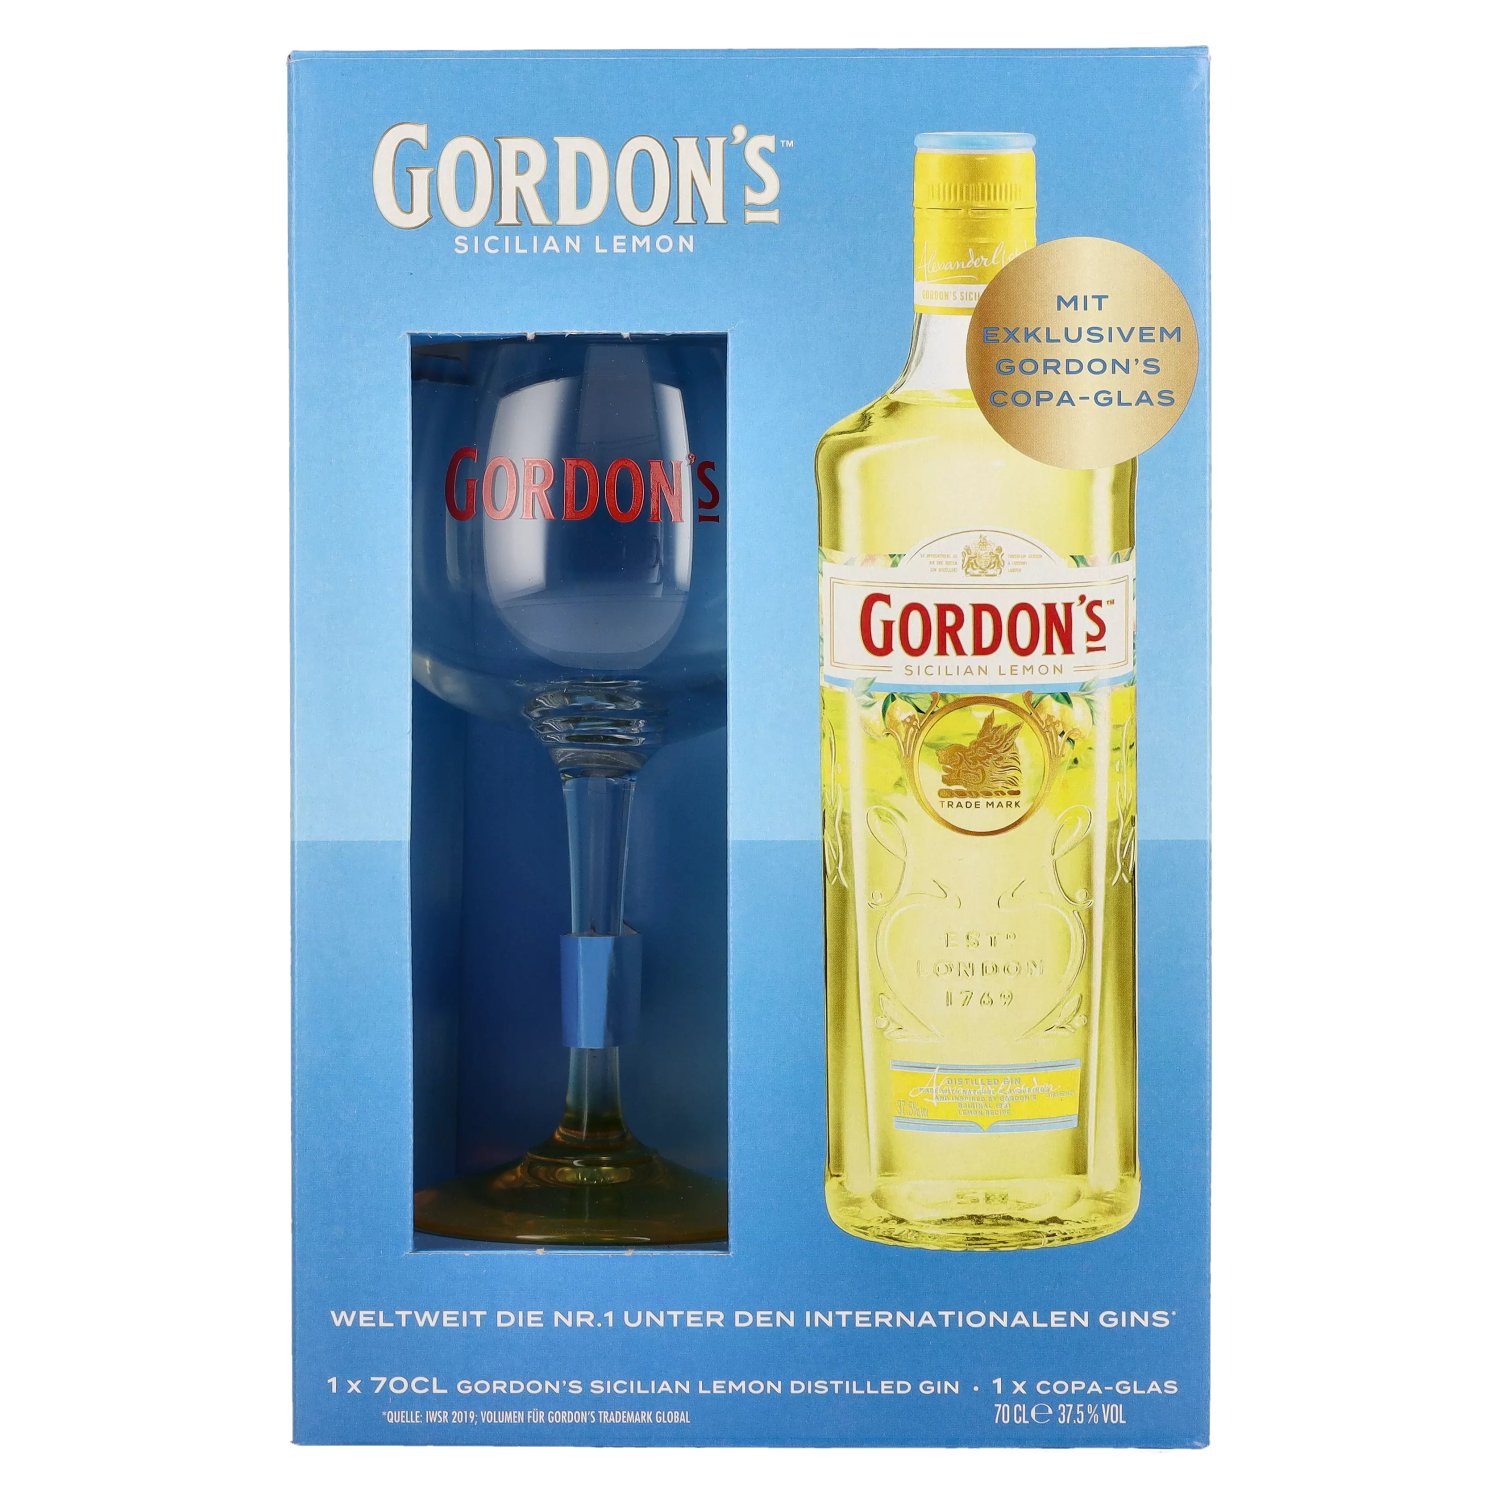 Gordon\'s 37,5% LEMON glass Vol. Distilled in Gin Giftbox with 0,7l SICILIAN